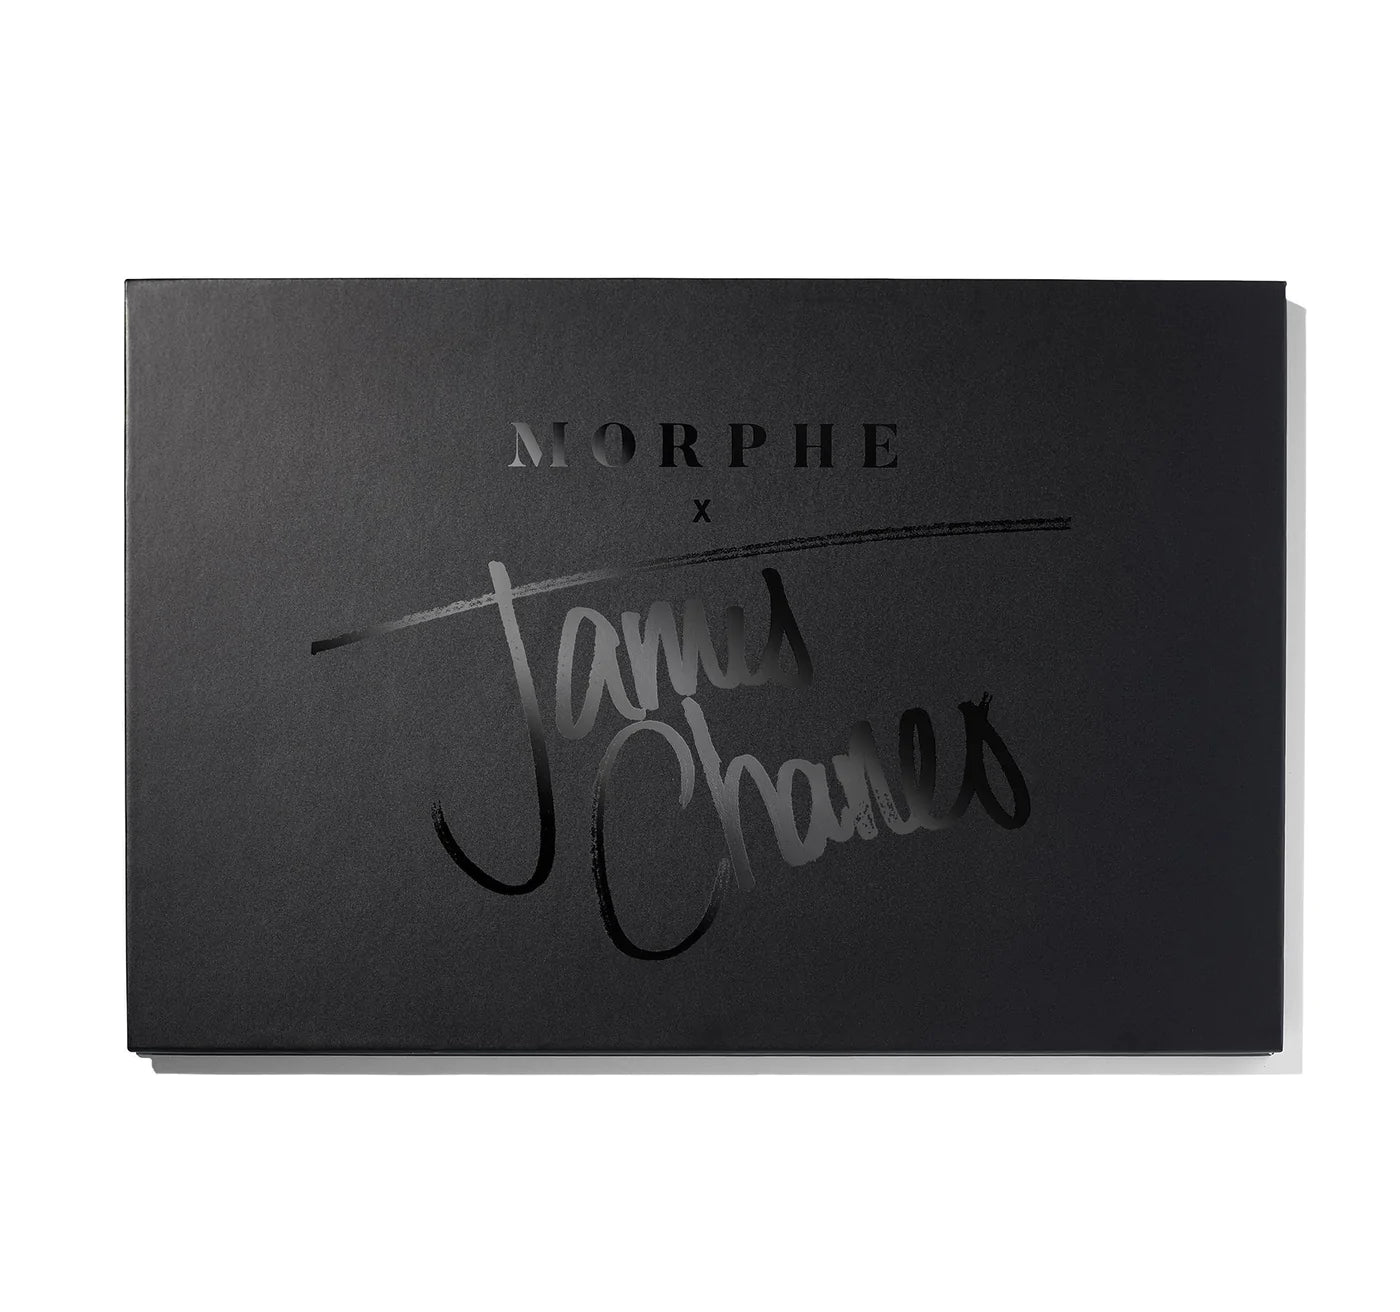 James Charles by Morphe Palette